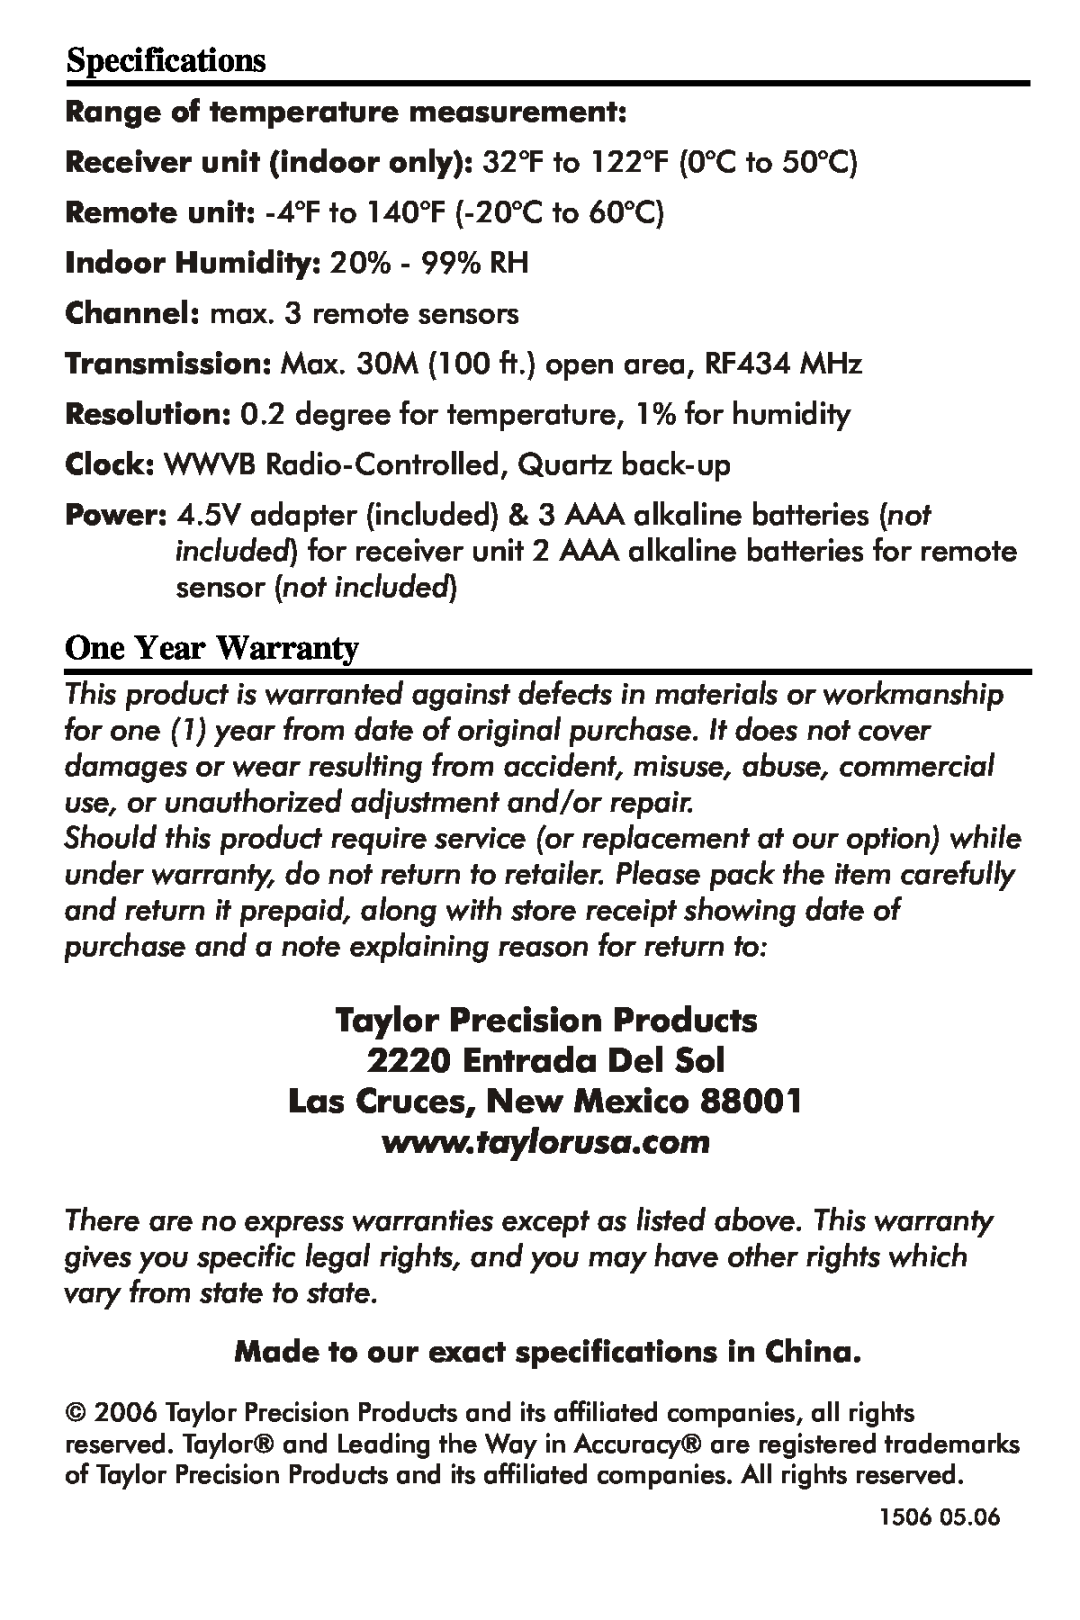 Taylor 1506 Specifications, One Year Warranty, Taylor Precision Products 2220 Entrada Del Sol, Las Cruces, New Mexico 